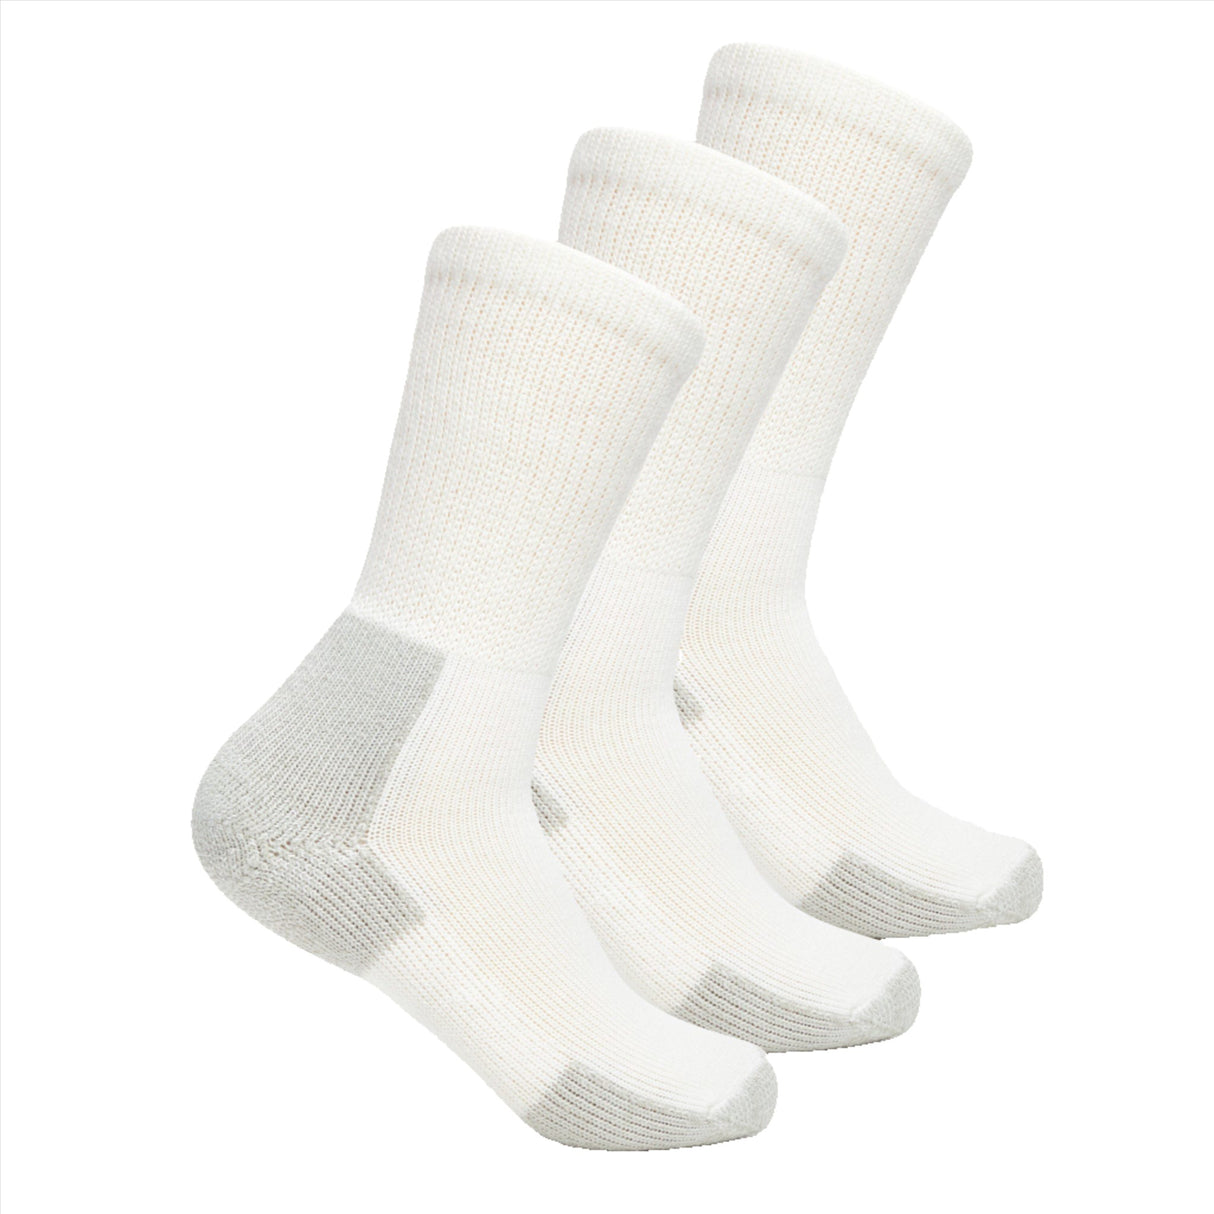 Thorlo Maximum Cushion Crew Running Socks  -  Medium / White/Platinum / 3-Pair Pack